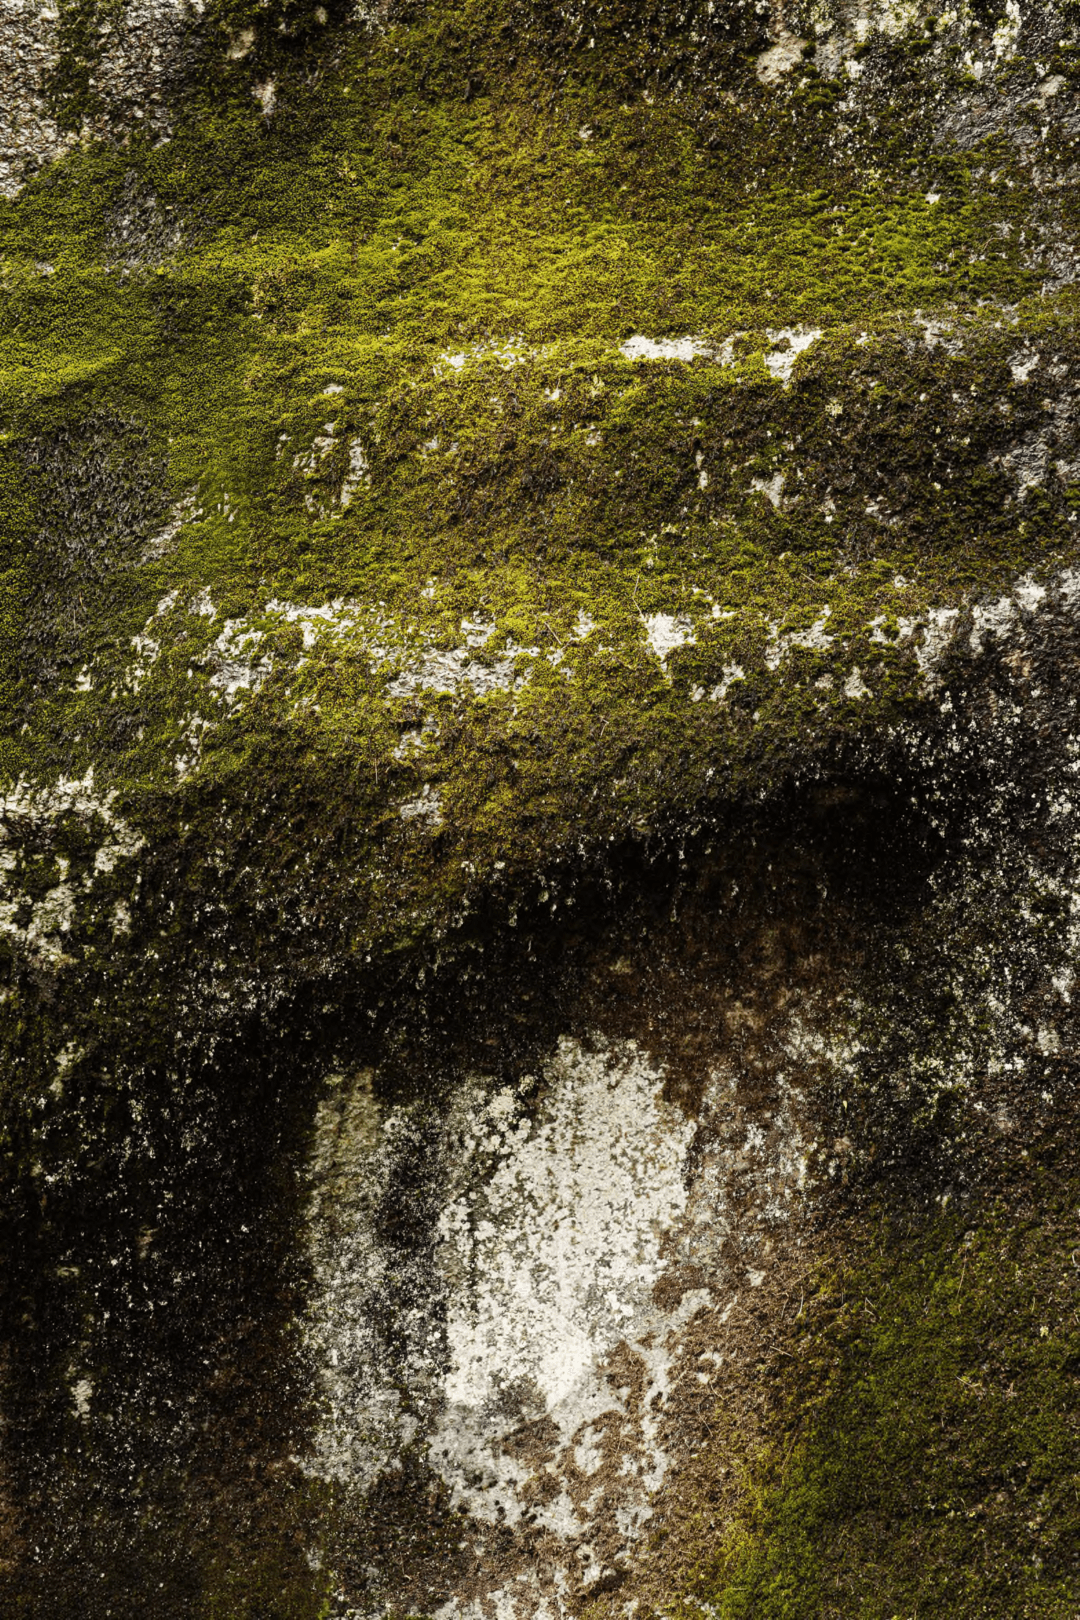 Some nice moss on rock